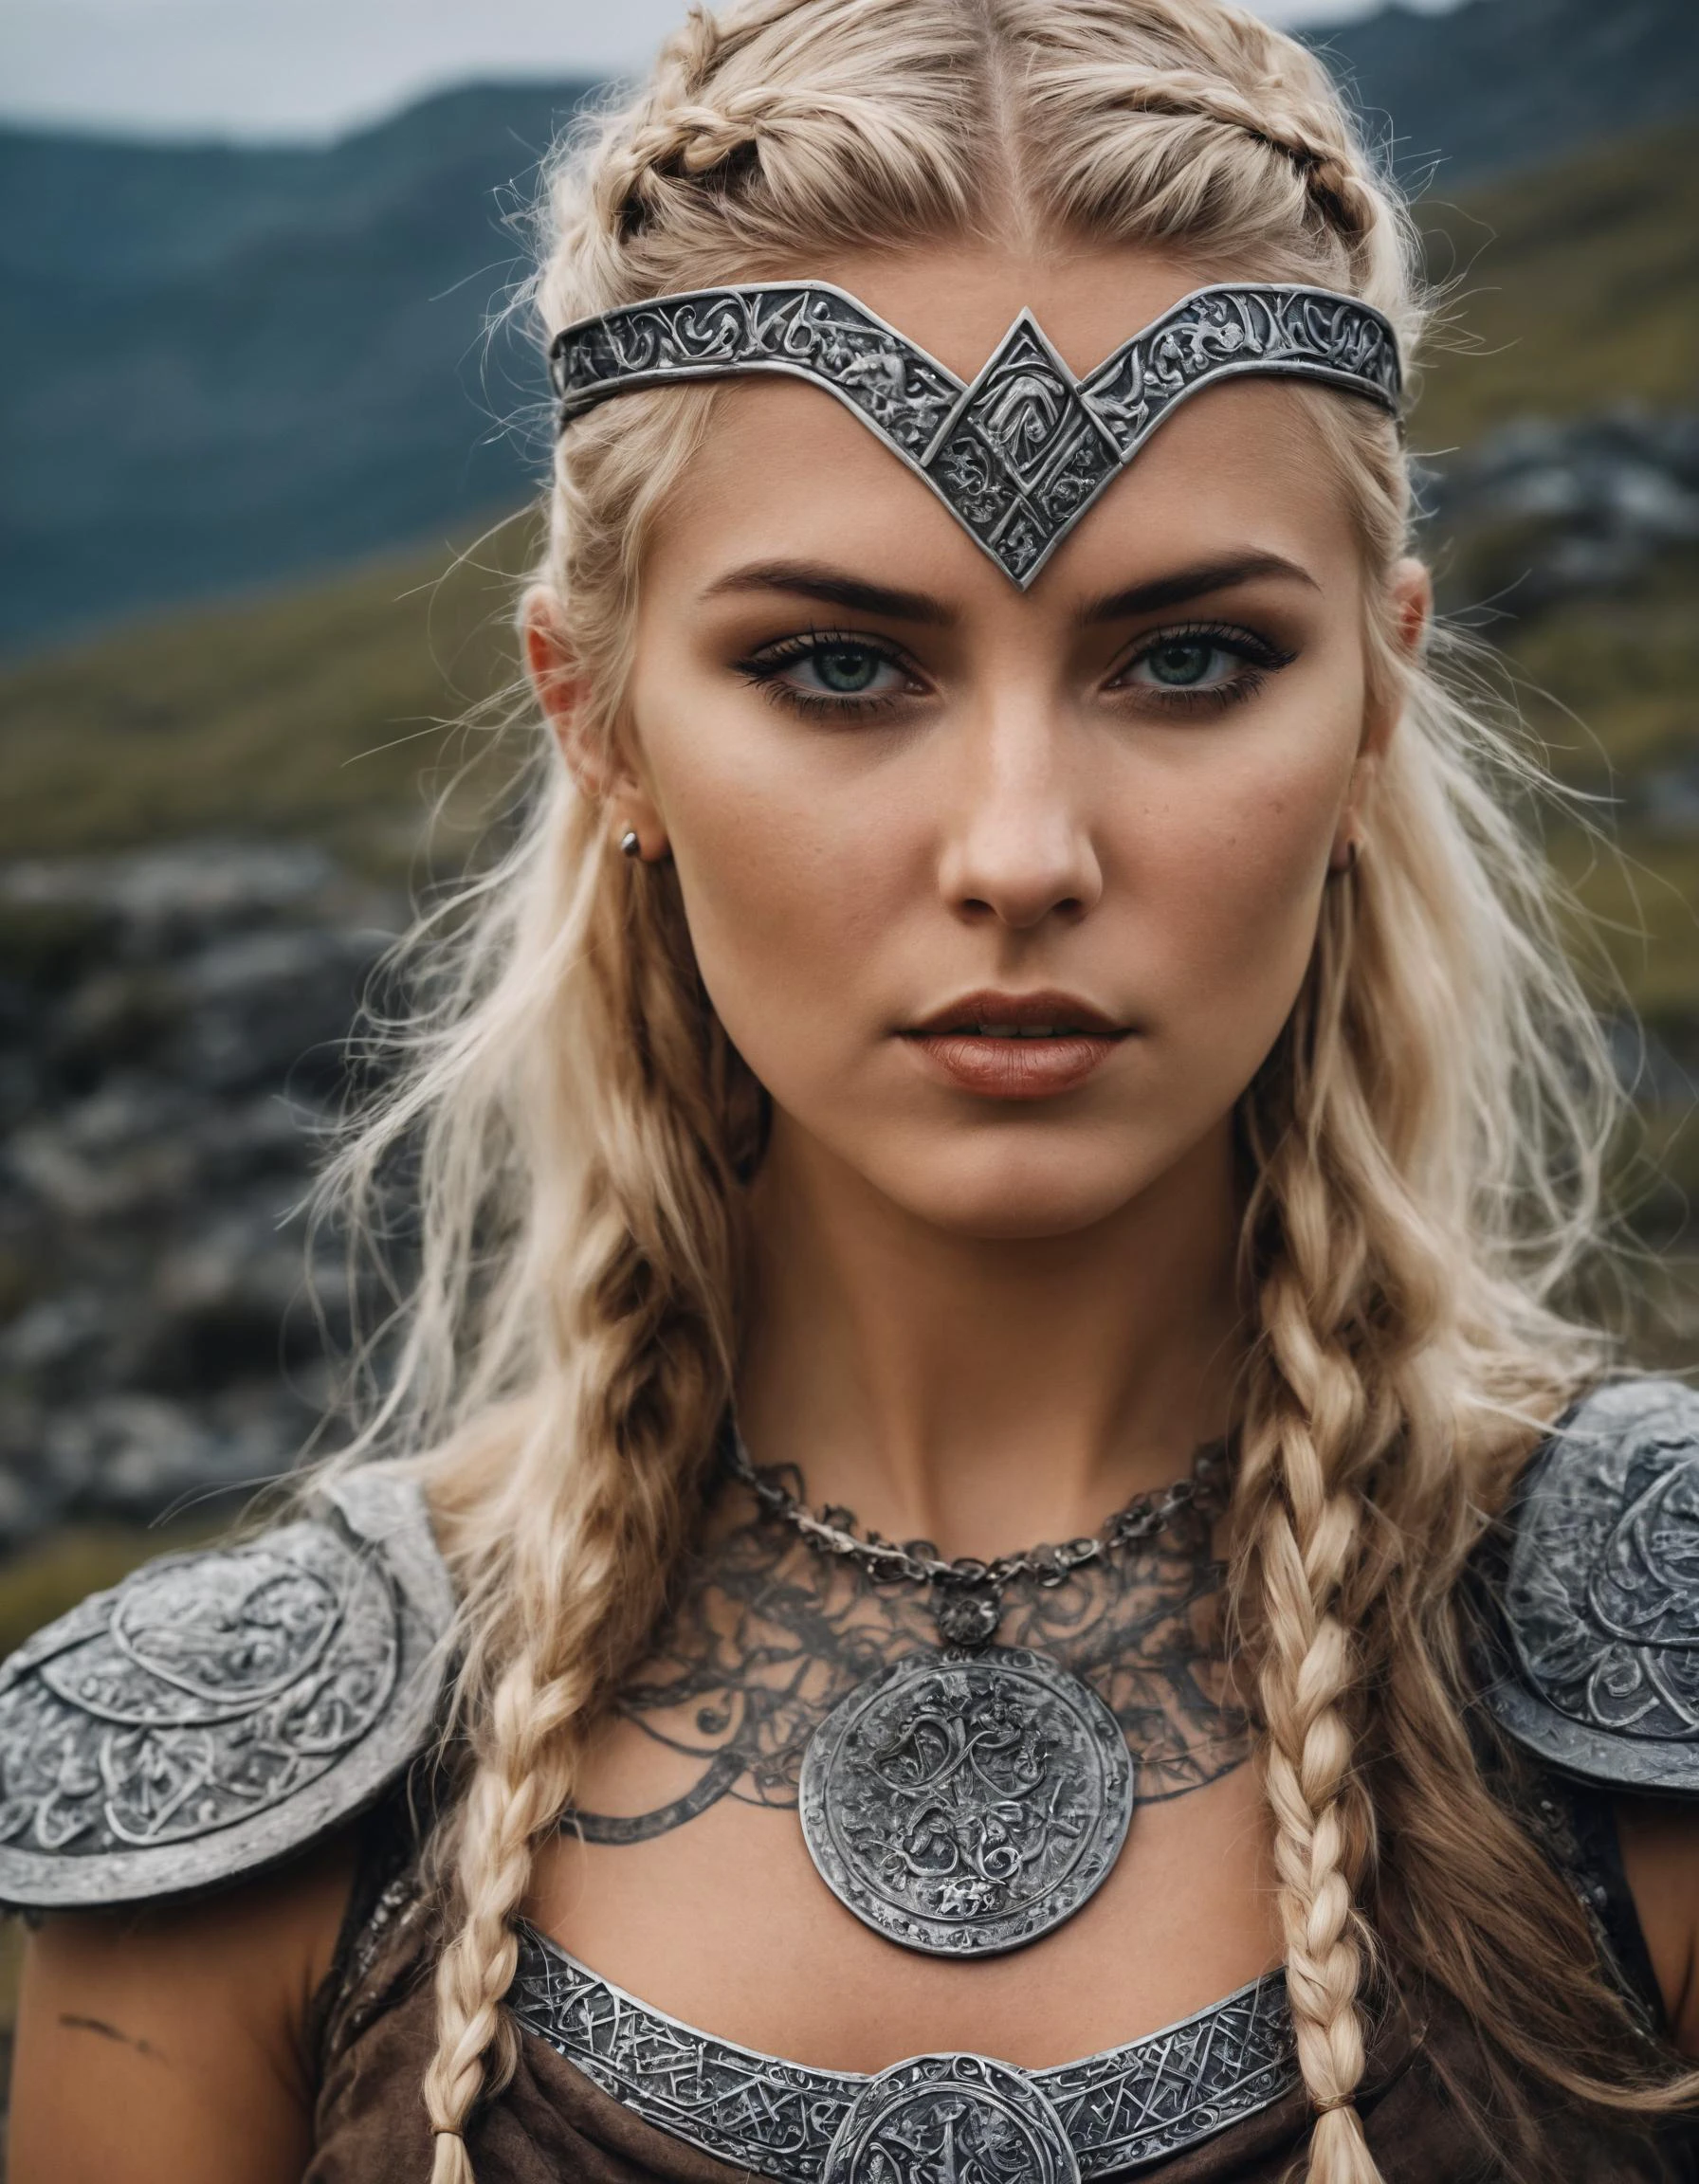 Donzela guerreira viking, dark Runas, Guerreiro do Norte, terra dura, rosto bonito!, Runas, mulher harpia, sem capacete, forte e guerreiro, furioso, valquíria, Vikings 